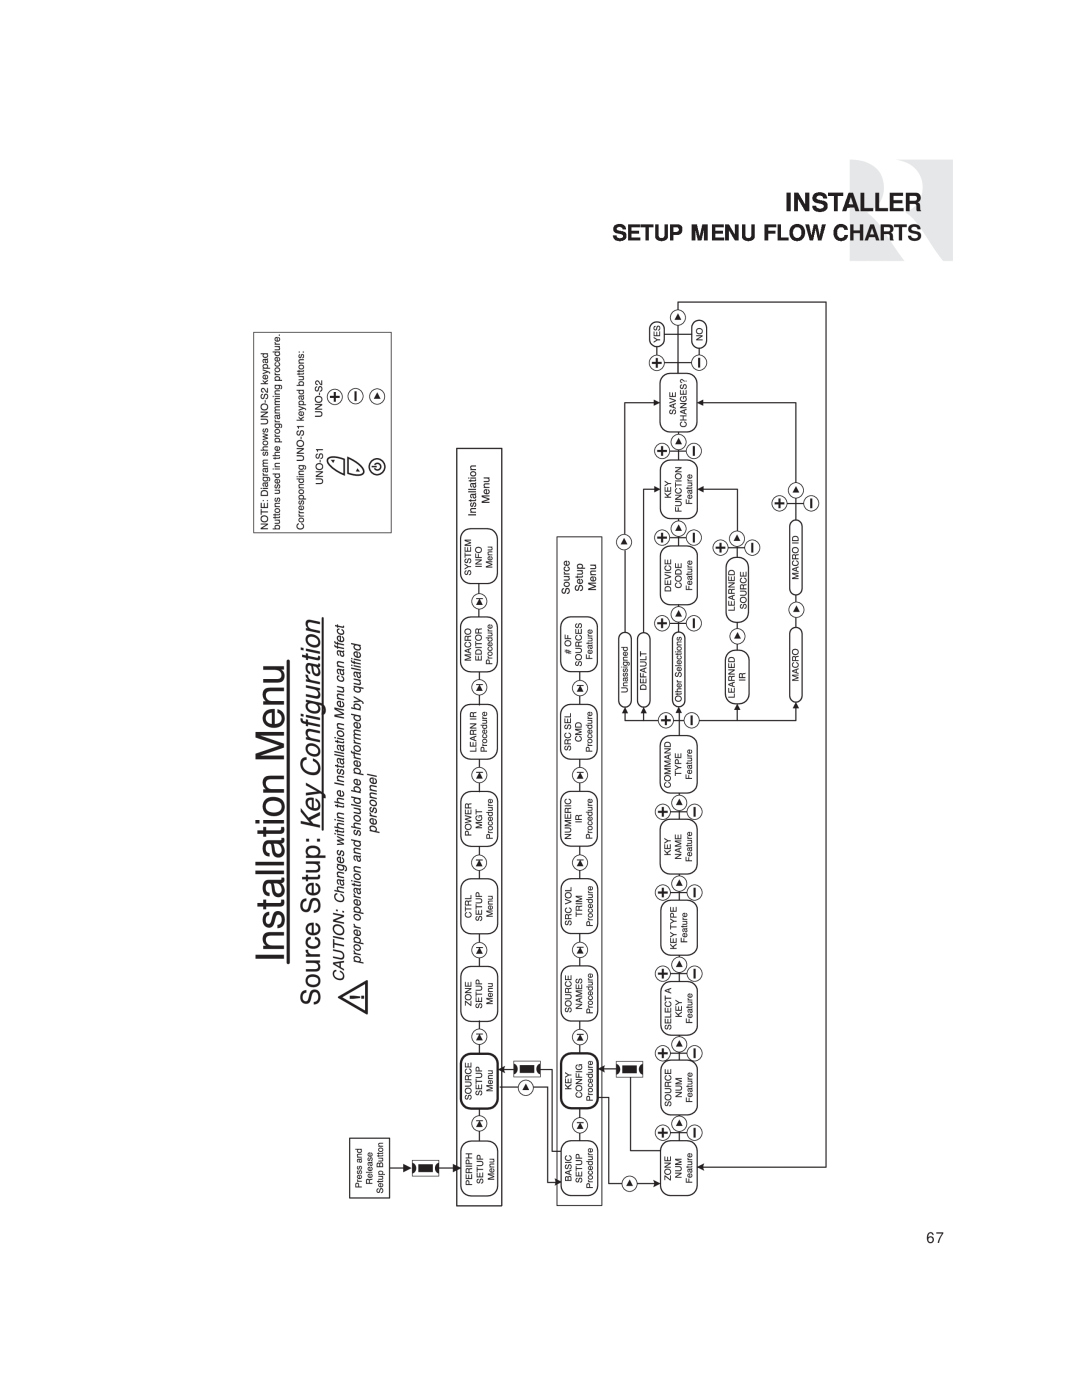 Russound CAM6.6T instruction manual Installer, Setup Menu Flow Charts 